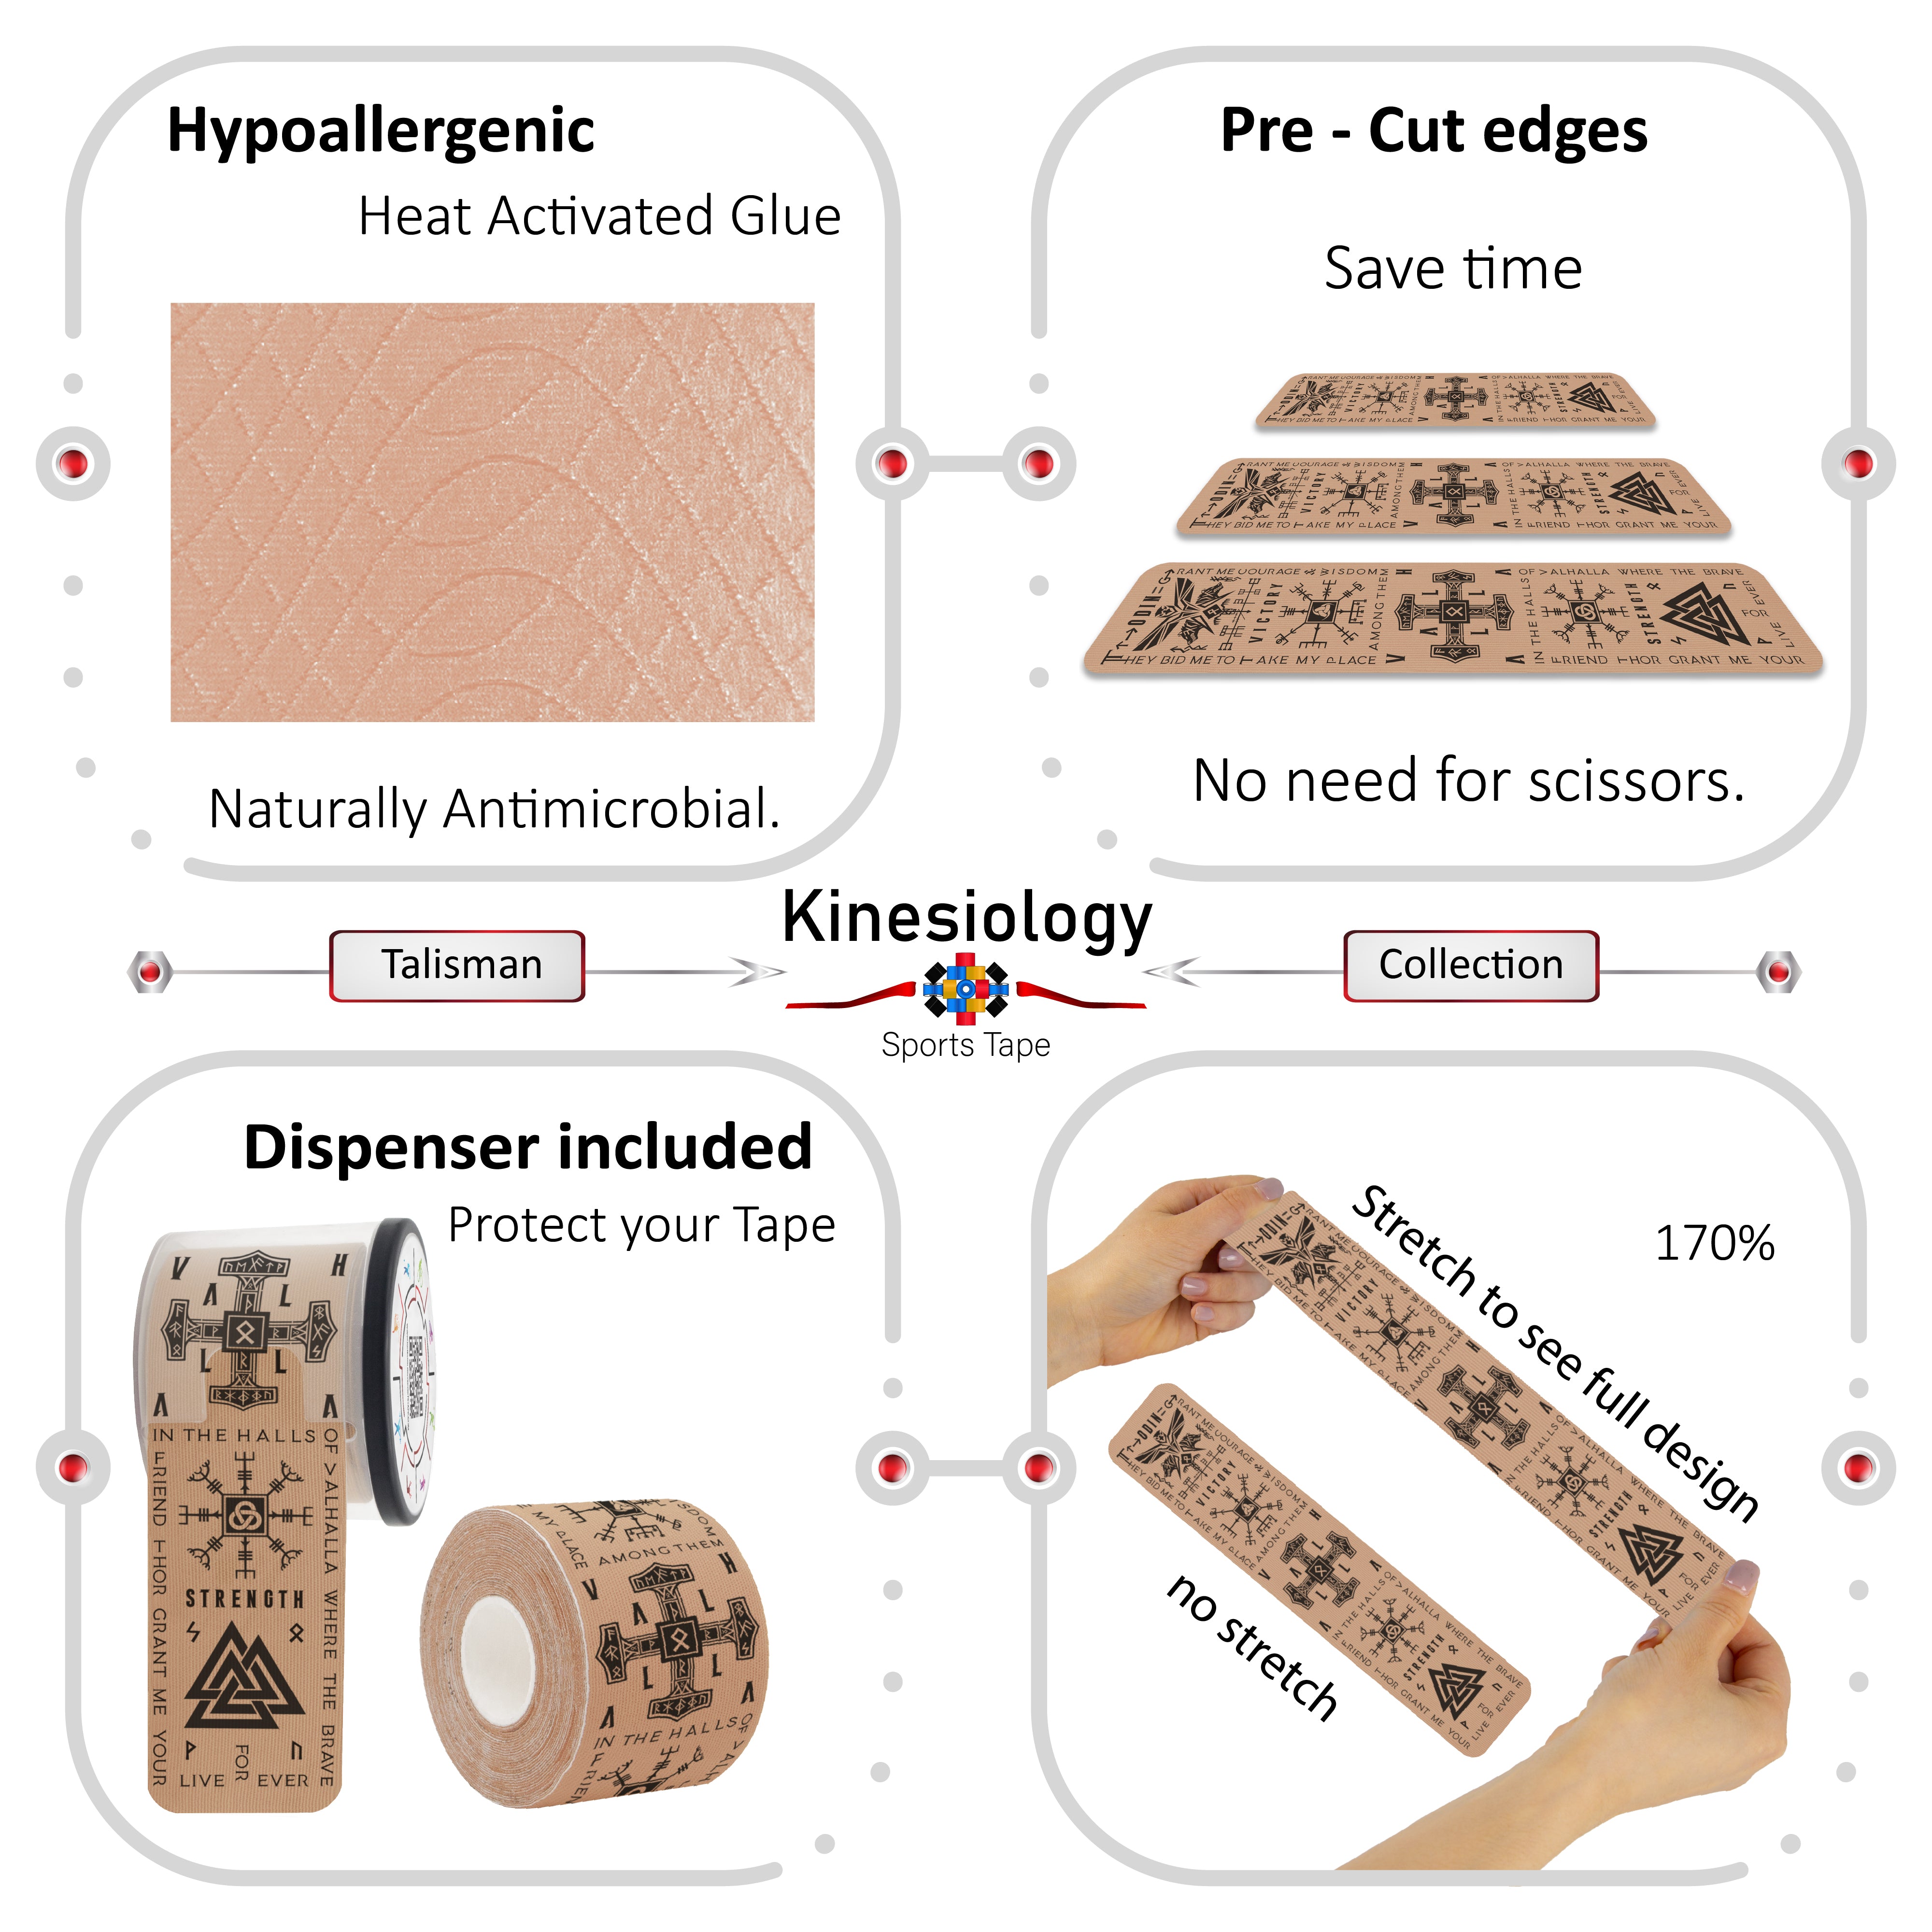 Beige Kinesiology Tape Pre Cut with Dispenser - Talisman - Viking - Vertical Design